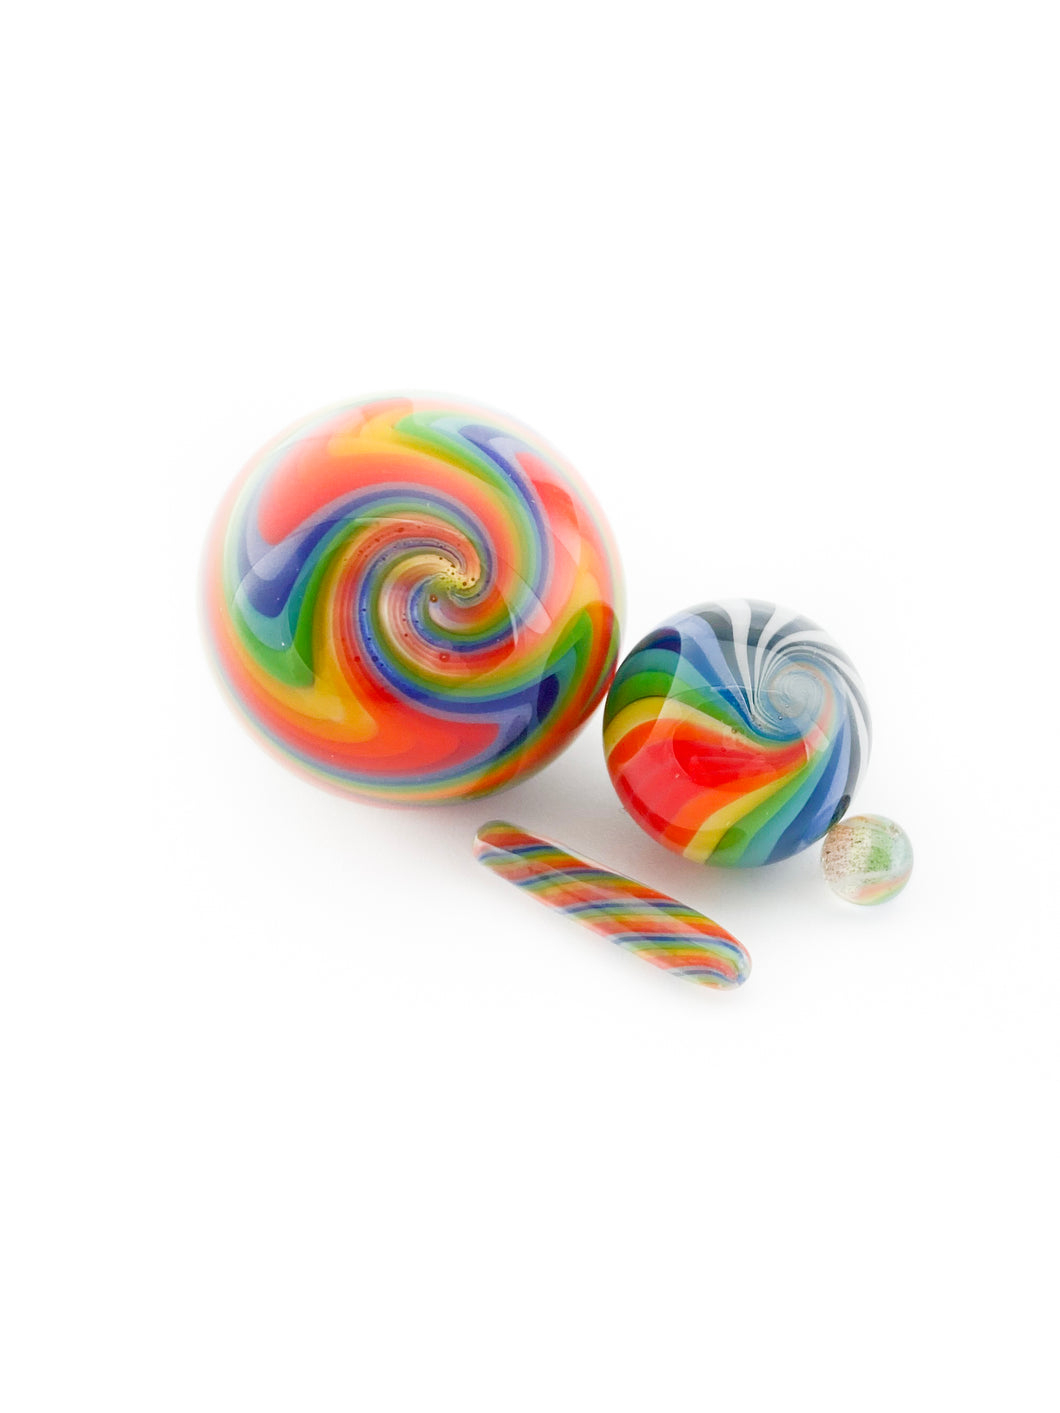 Slackglass - Terp Slurper Set - Lollipop lick